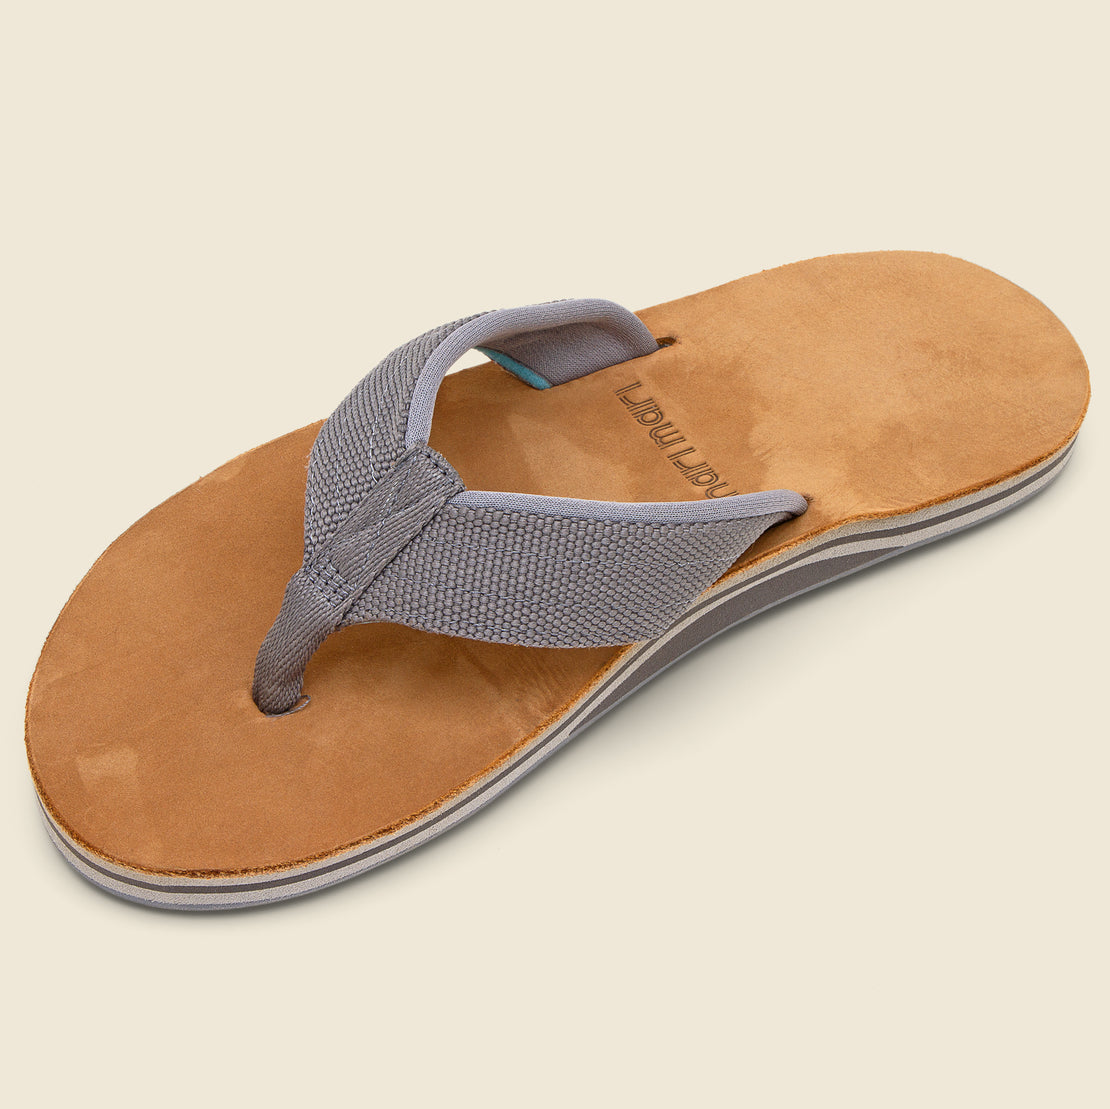 Scout Flip Flop - Pewter - Hari Mari - STAG Provisions - Shoes - Sandals / Flops